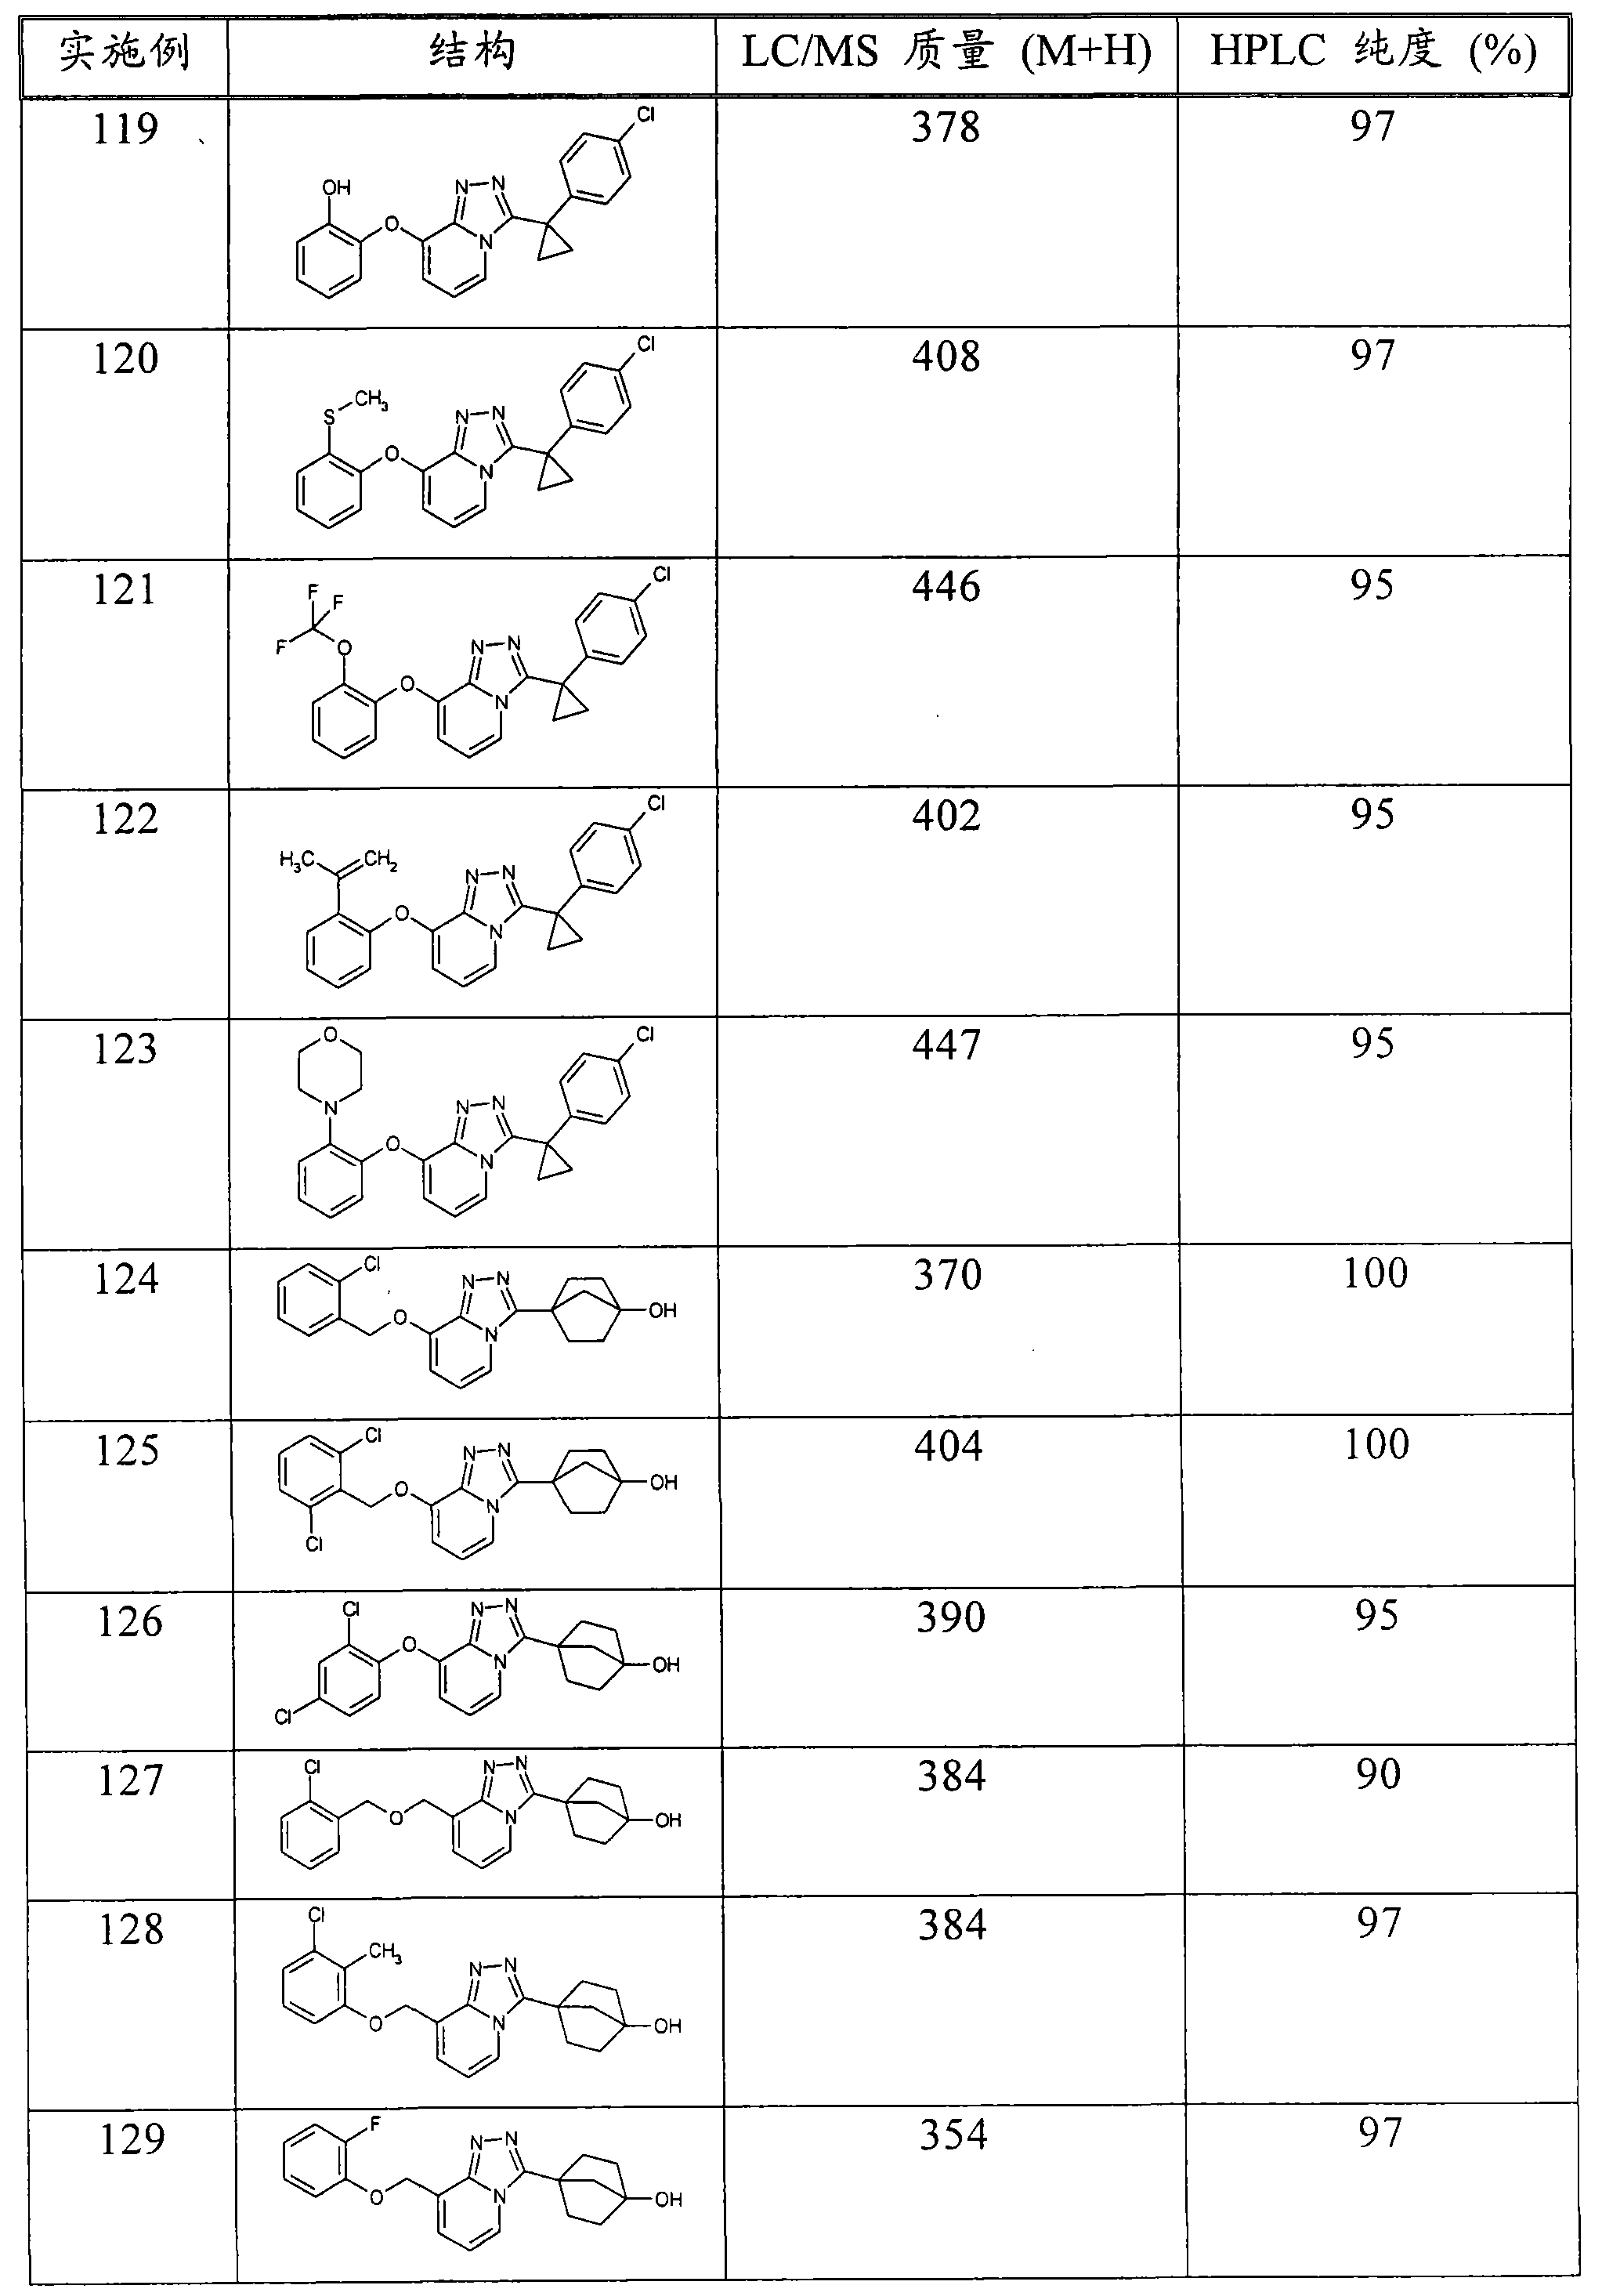 Imidazo- and triazolopyridines as inhibitors of 11-beta hydroxysteroid dehyftogenase type I